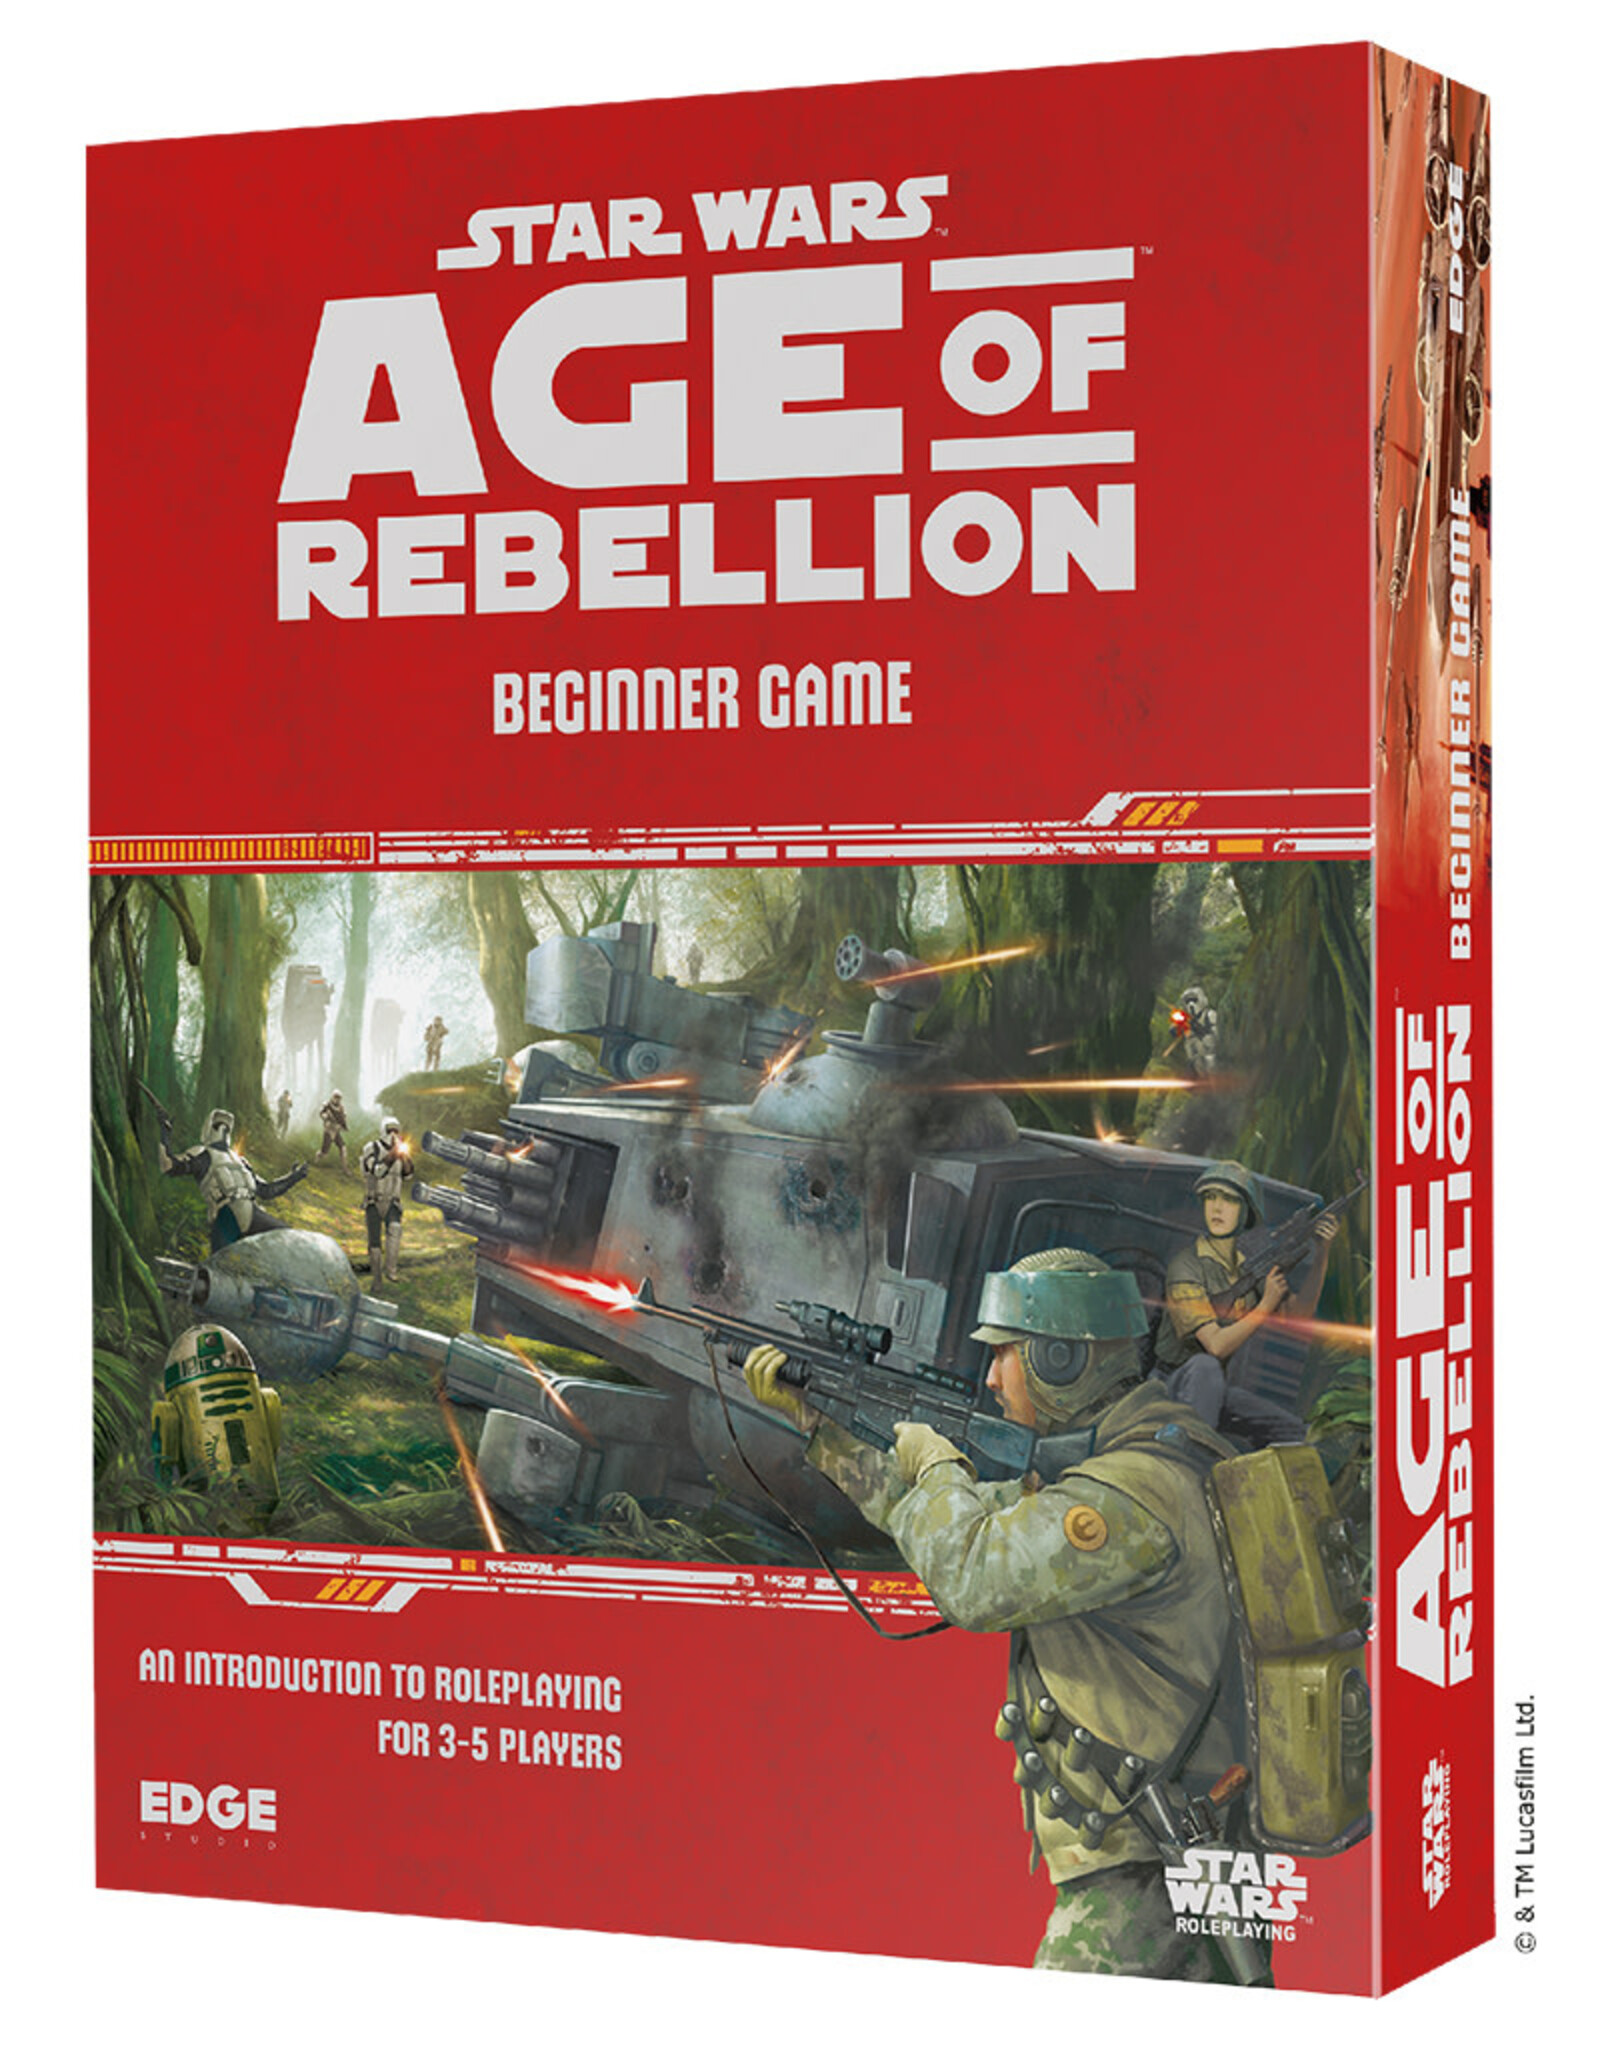 Star Wars RPG Age of Rebellion Beginner Game